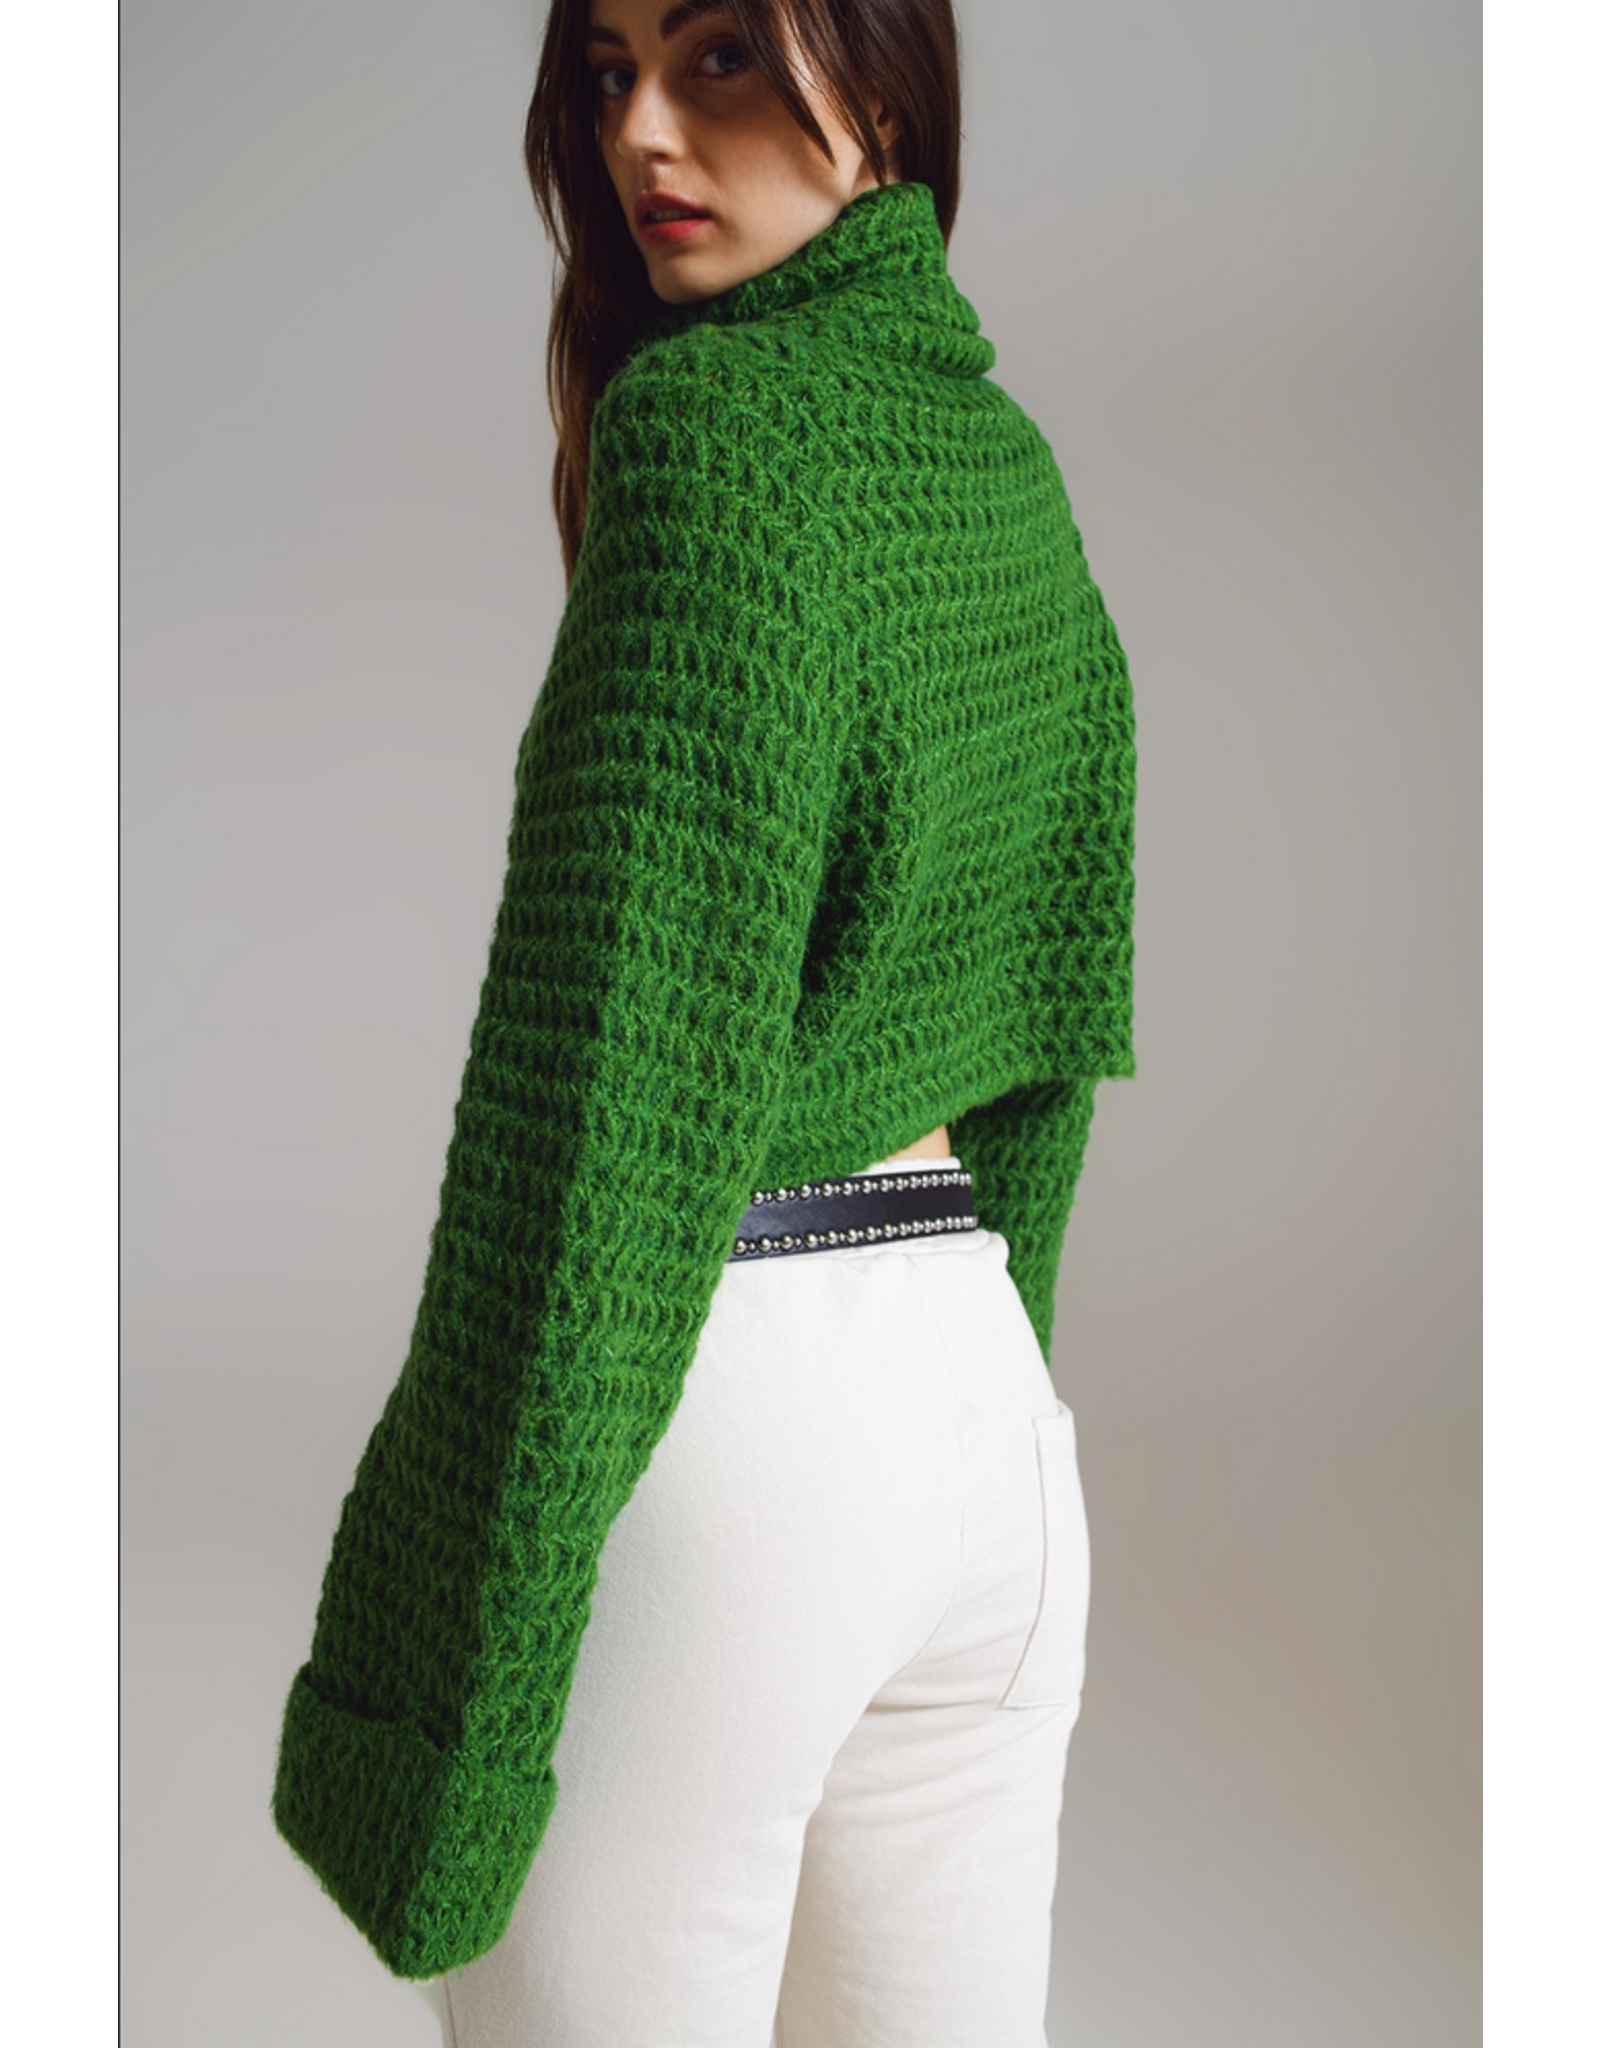 Q2 Green Waffle Knit Turtleneck Sweater